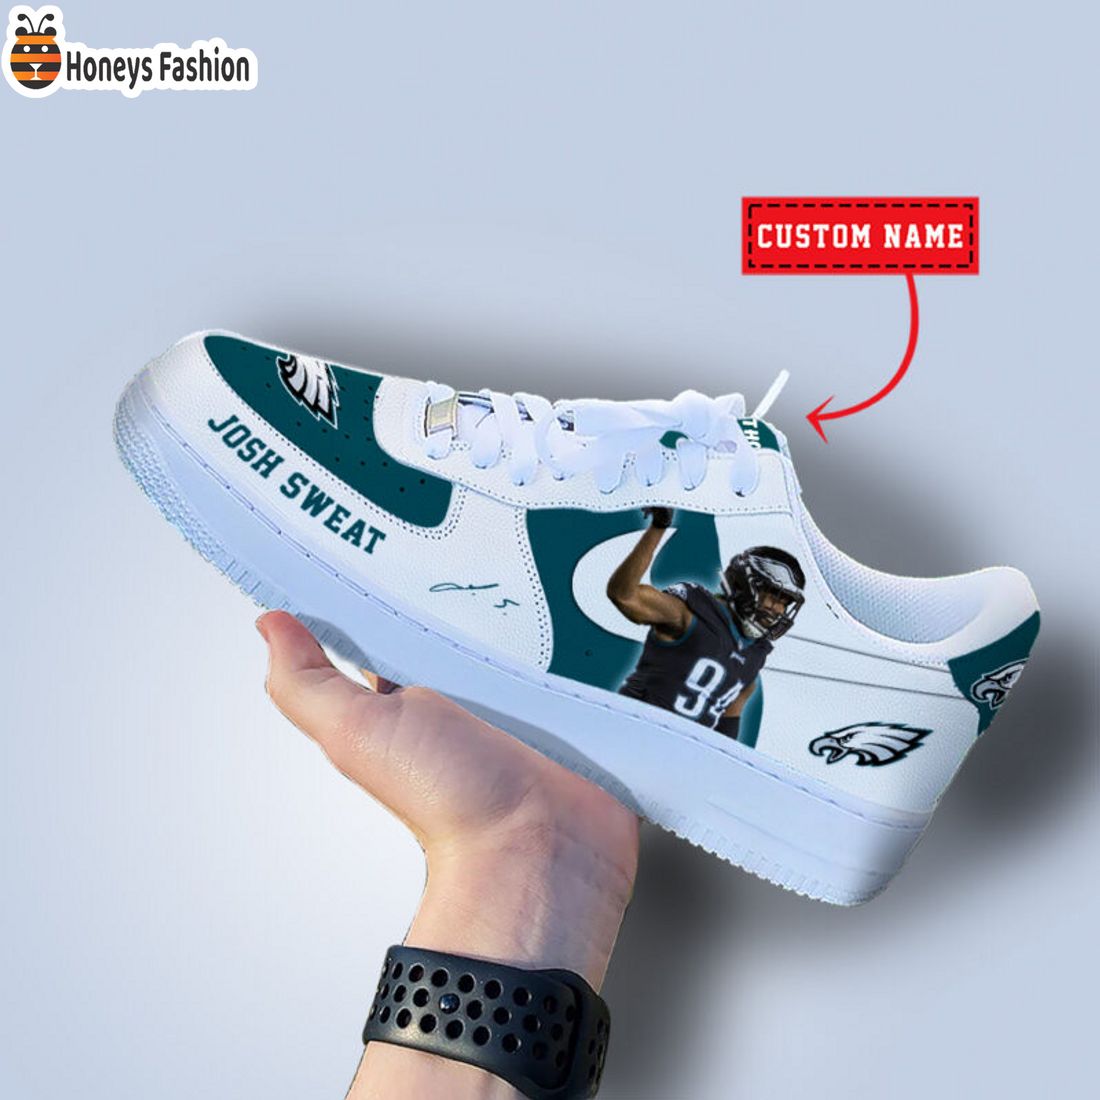 TOP SELLER Josh Sweat Philadelphia Eagles NFL Custom Name Nike Air Force Shoes